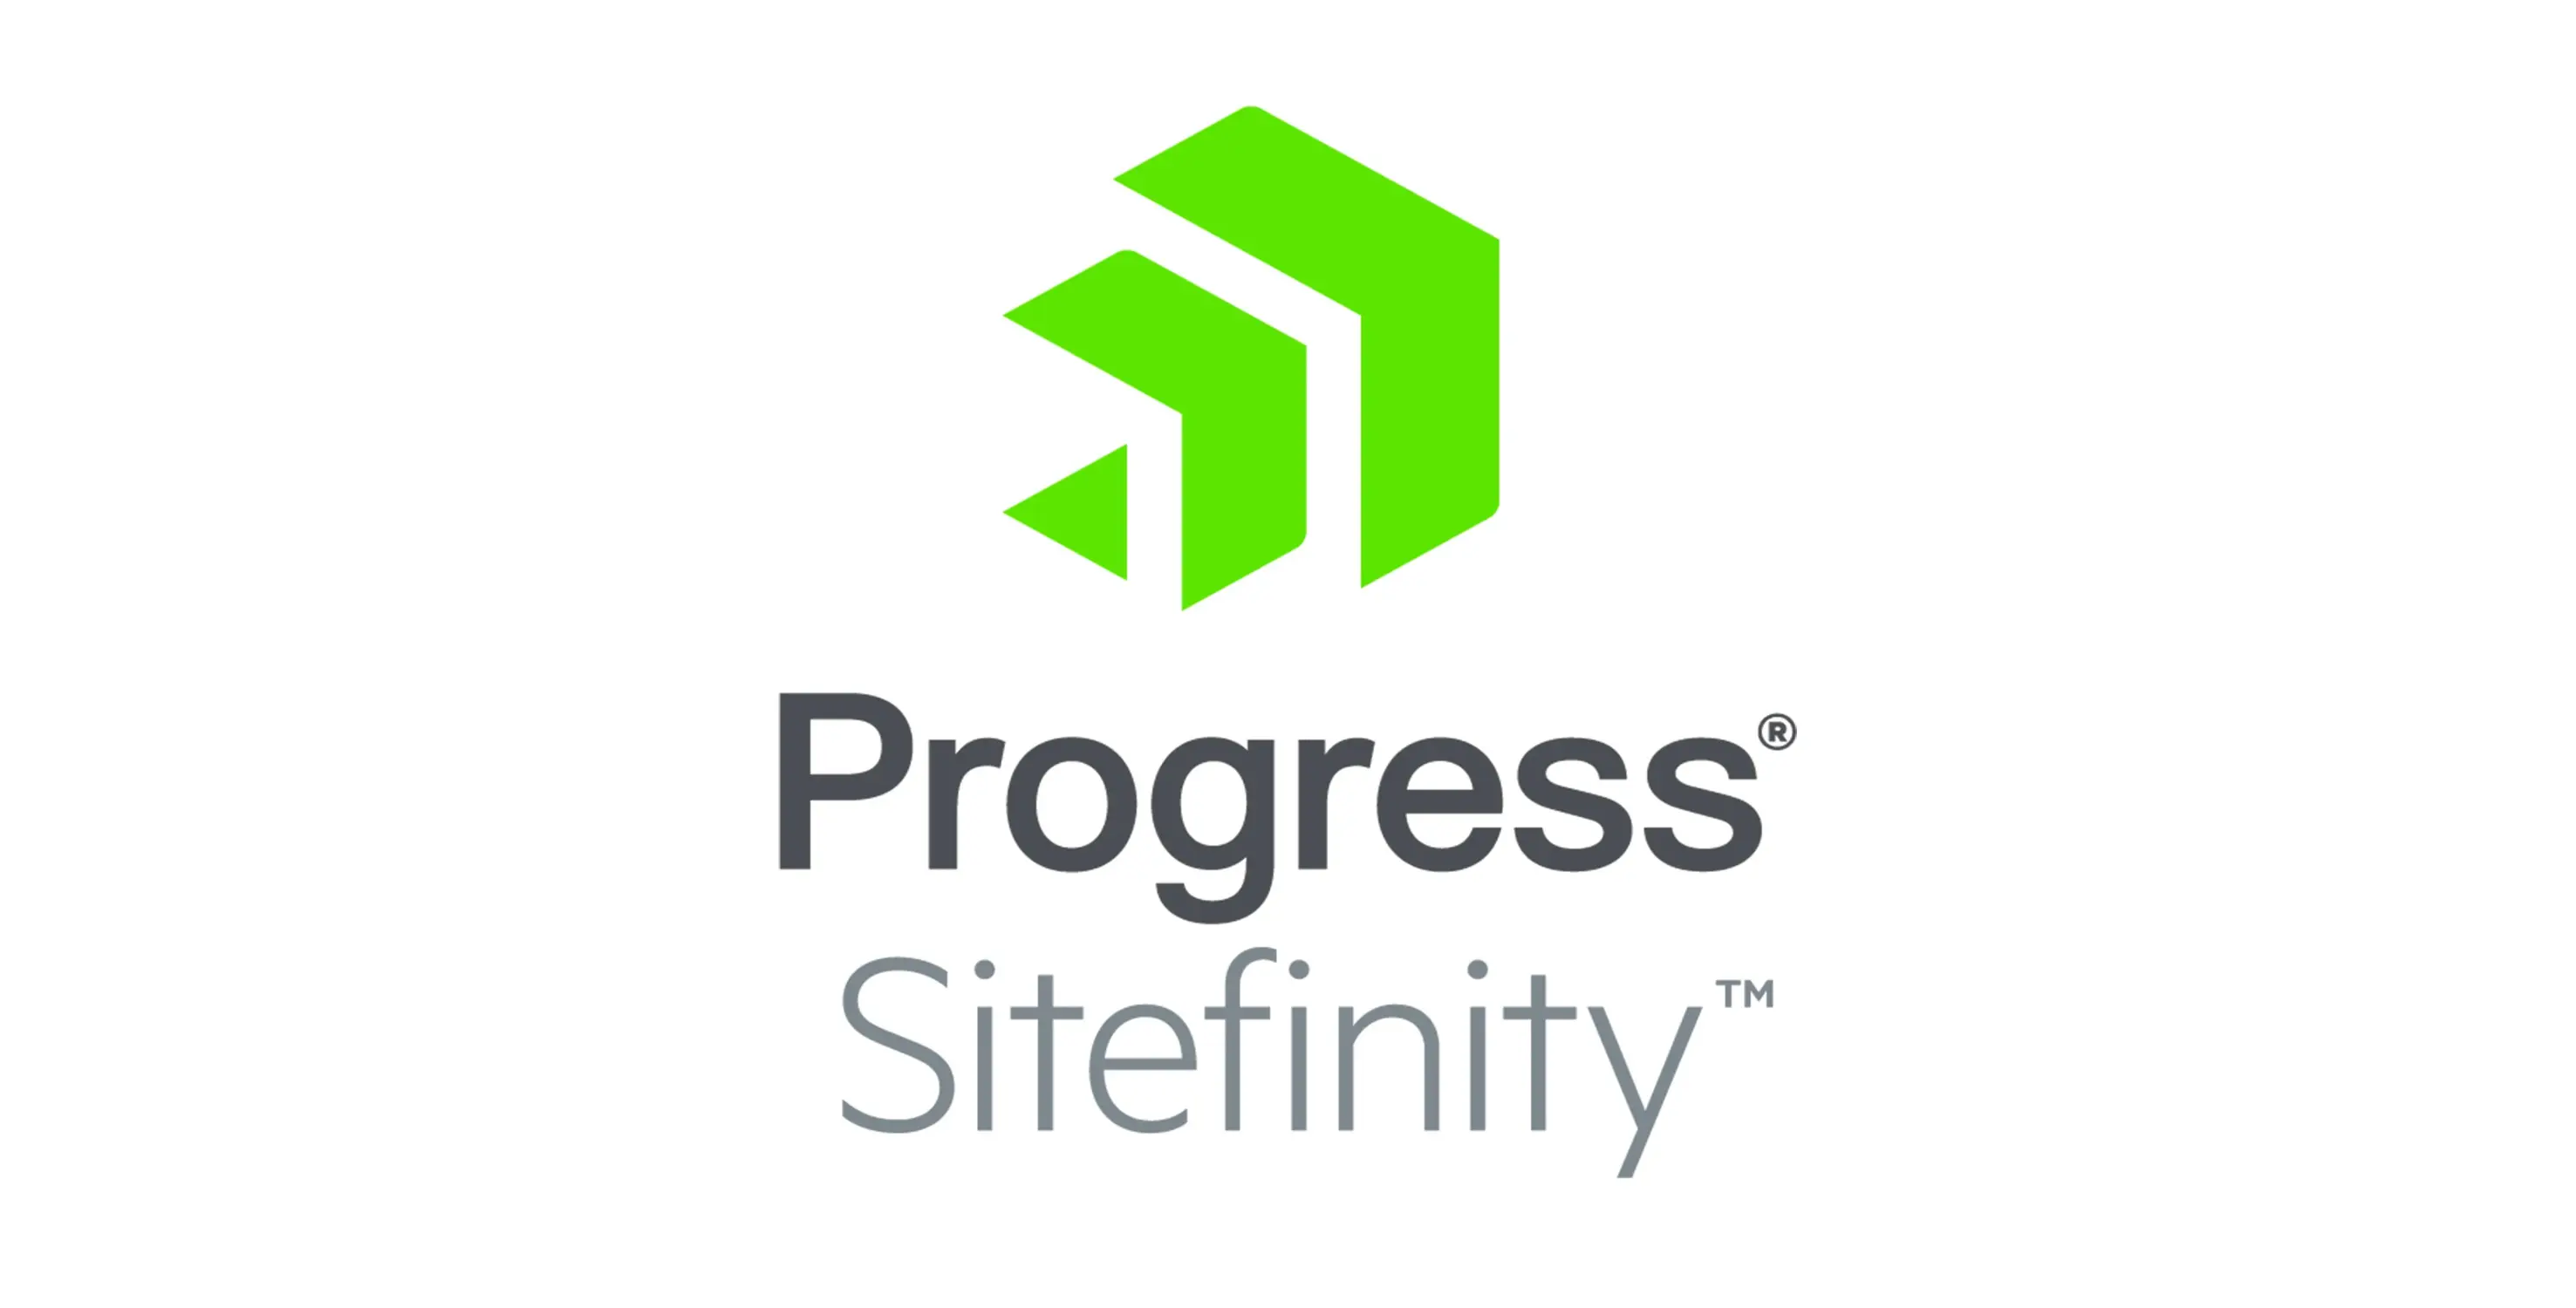 cms progress sitefinity translation